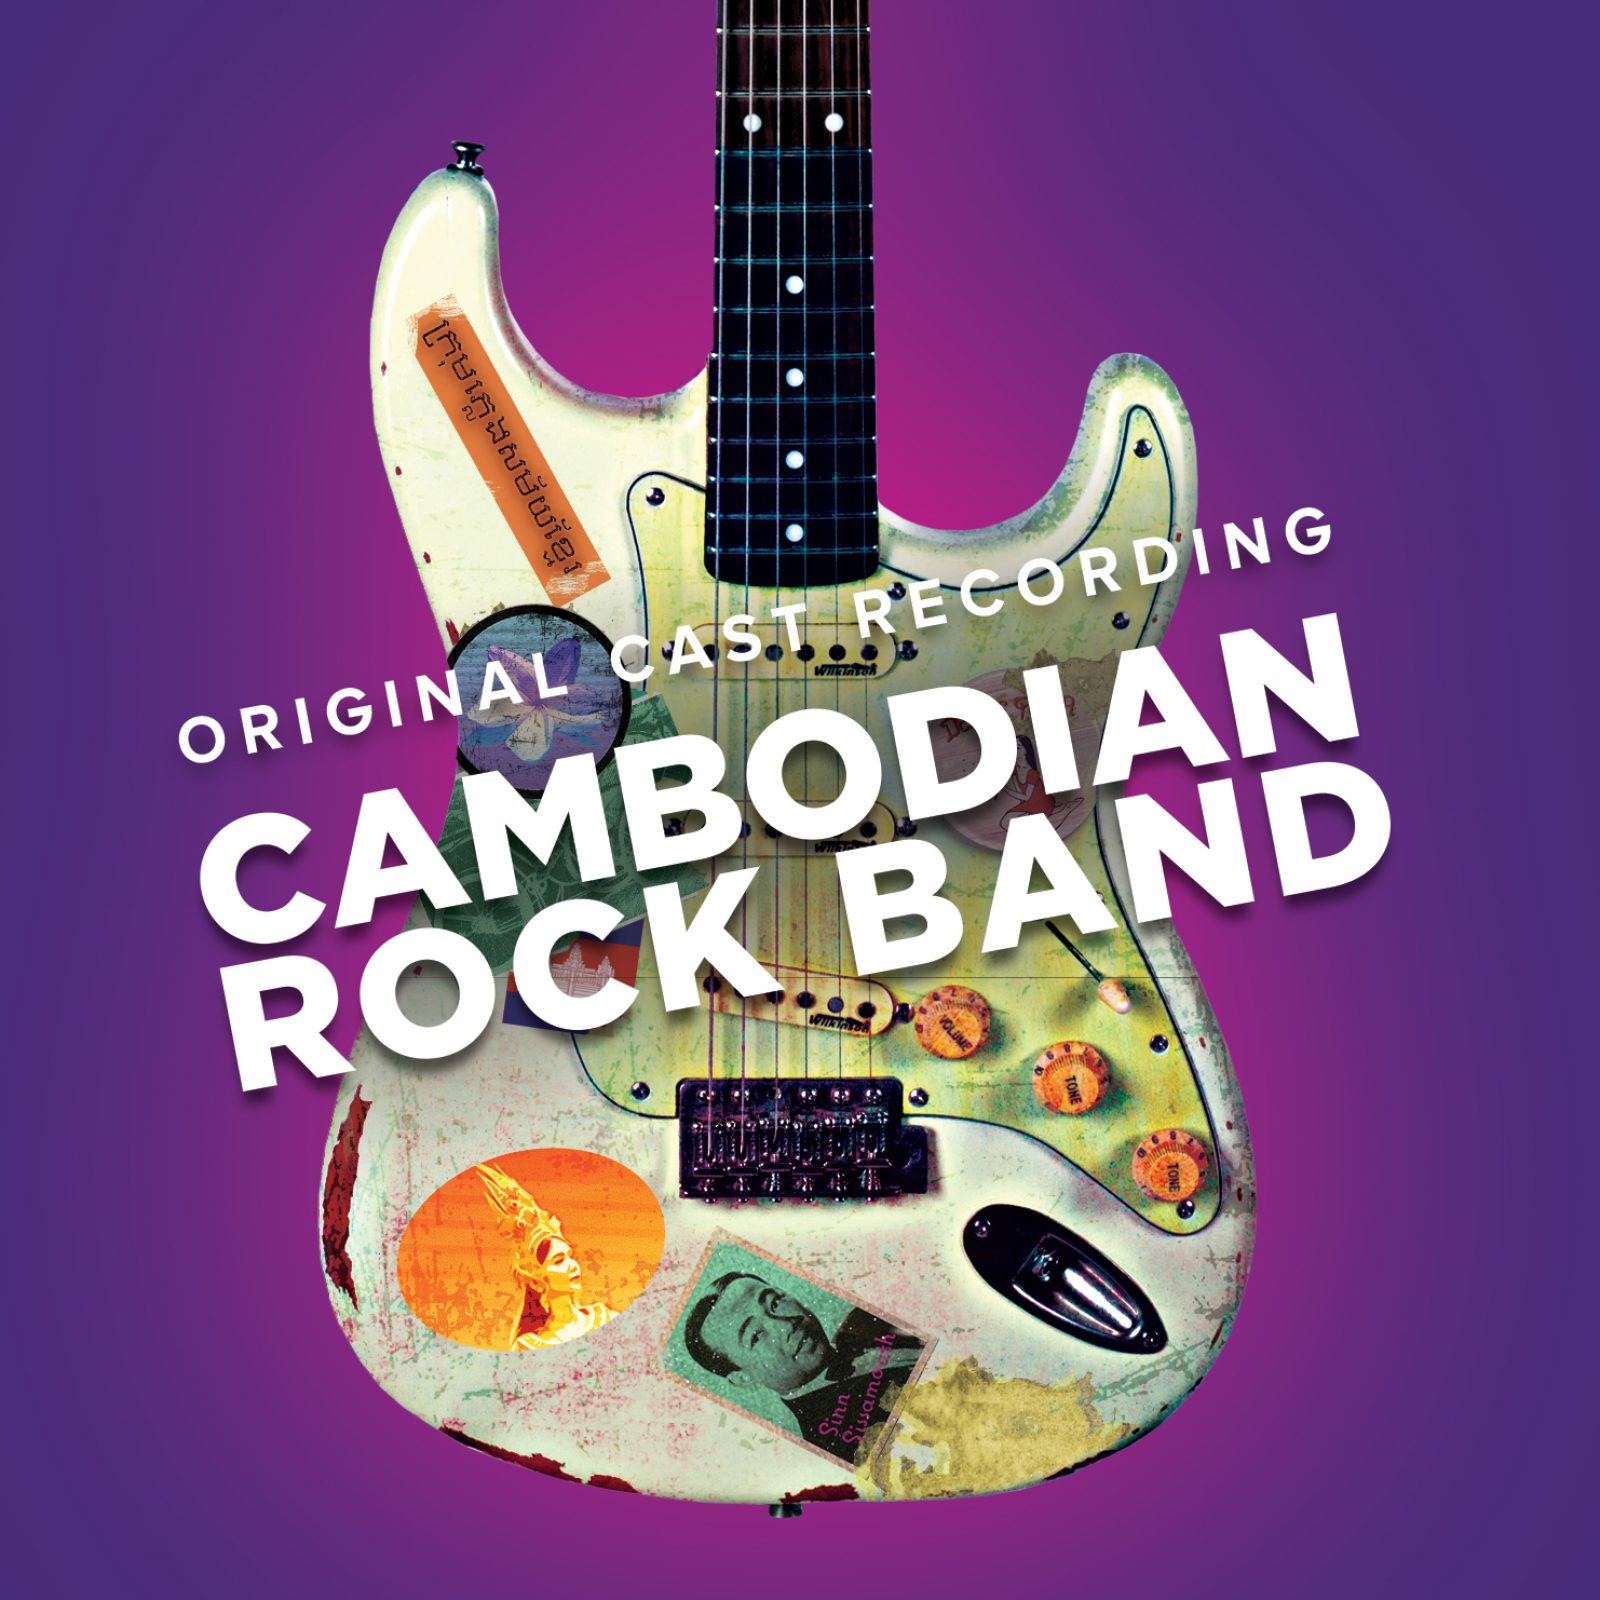 Cambodian Rock Band – Original Cast Recording